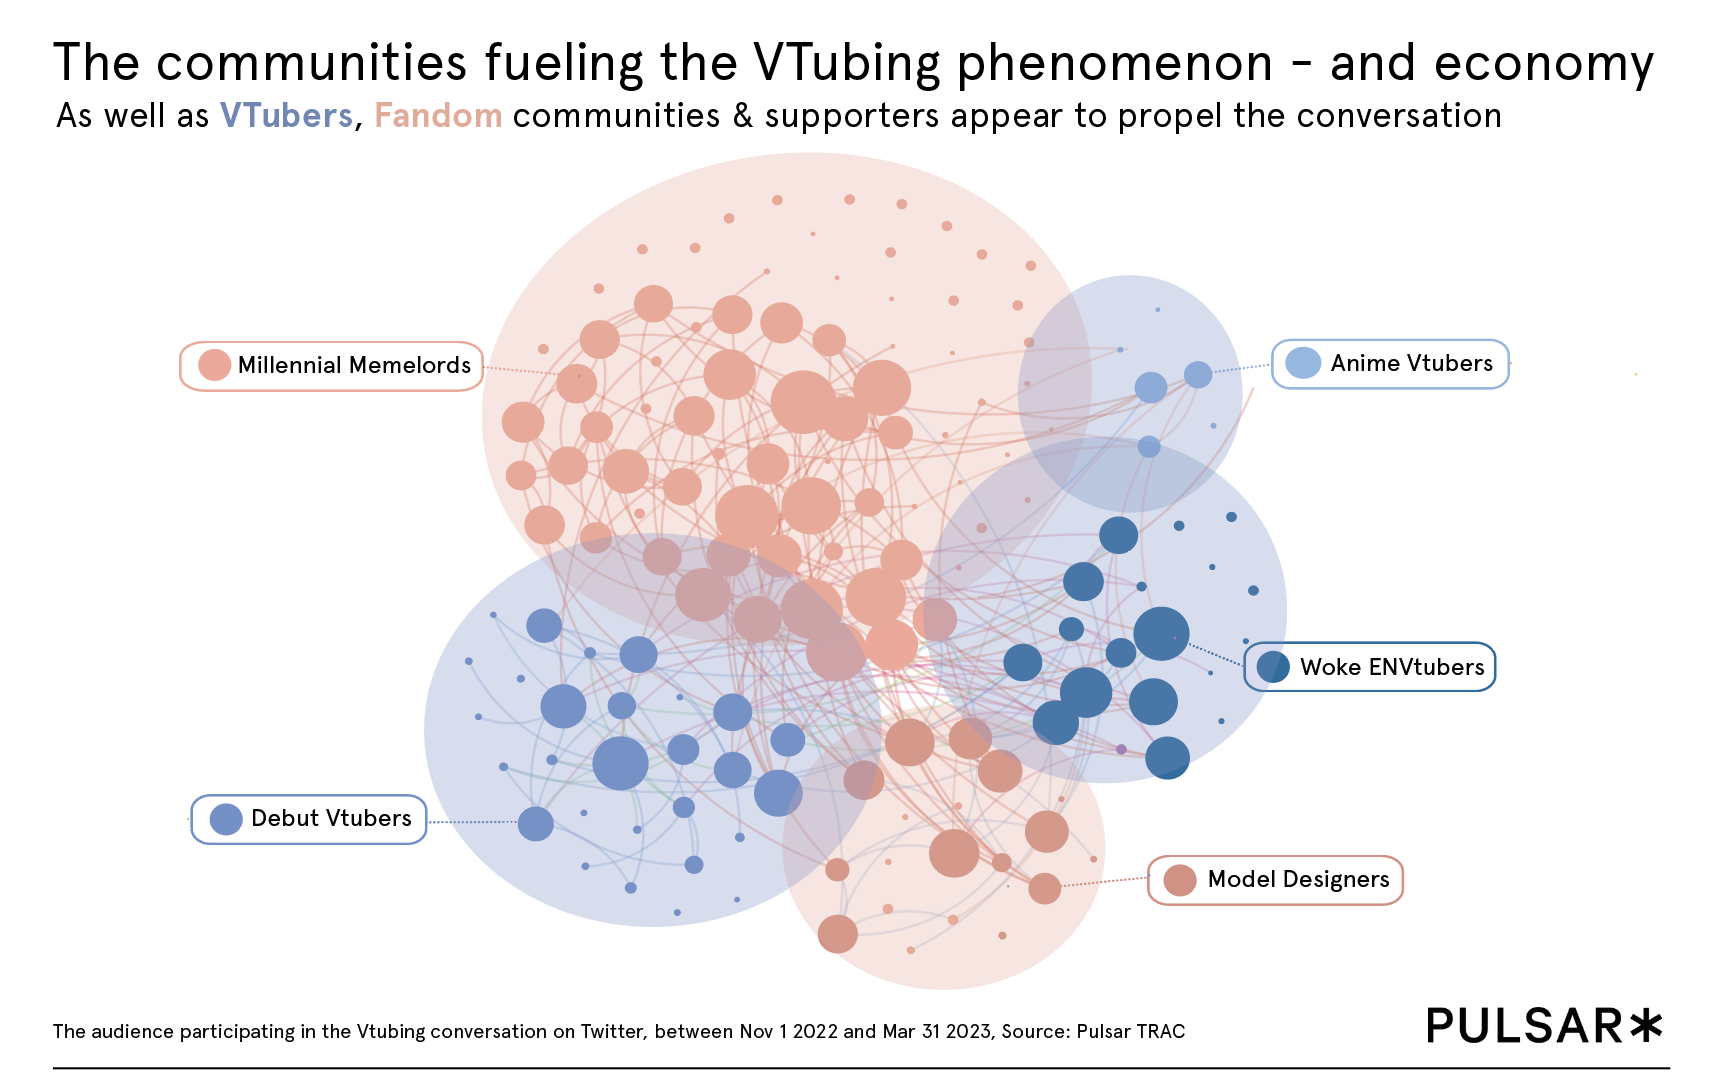 The communities fueling the Vtubing phenomenon - and economy